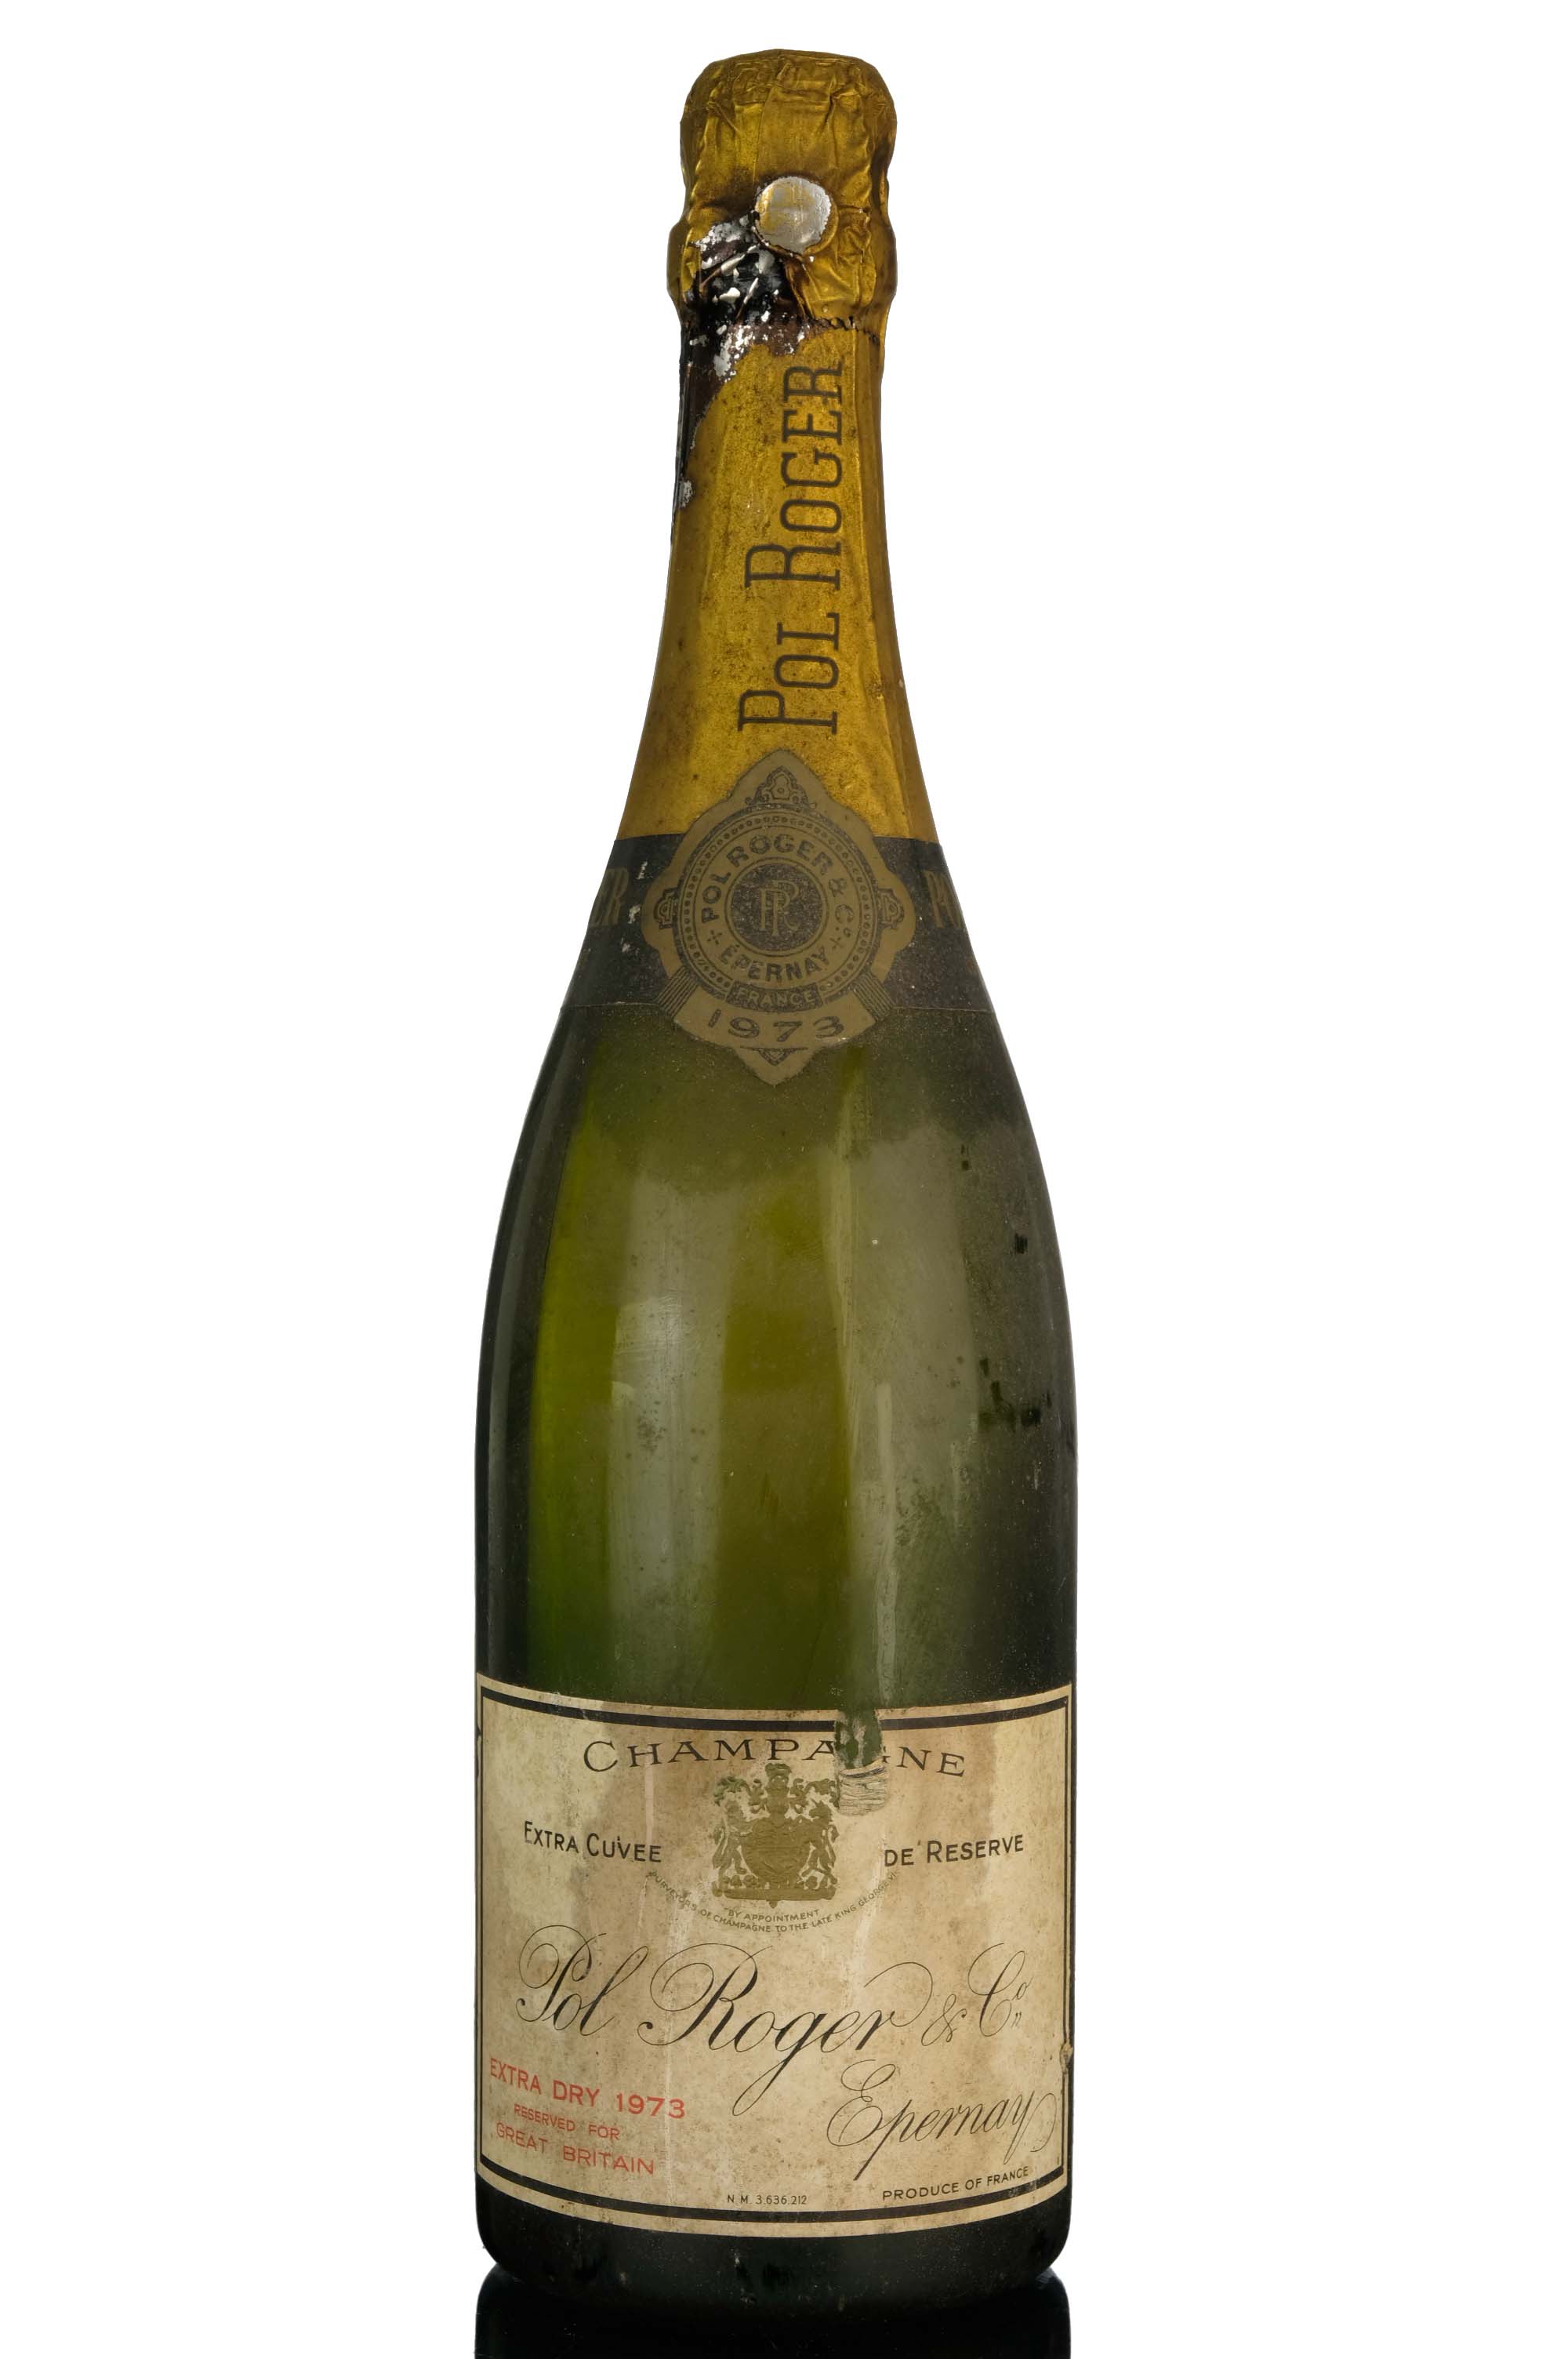 Pol Roger 1973 Champagne